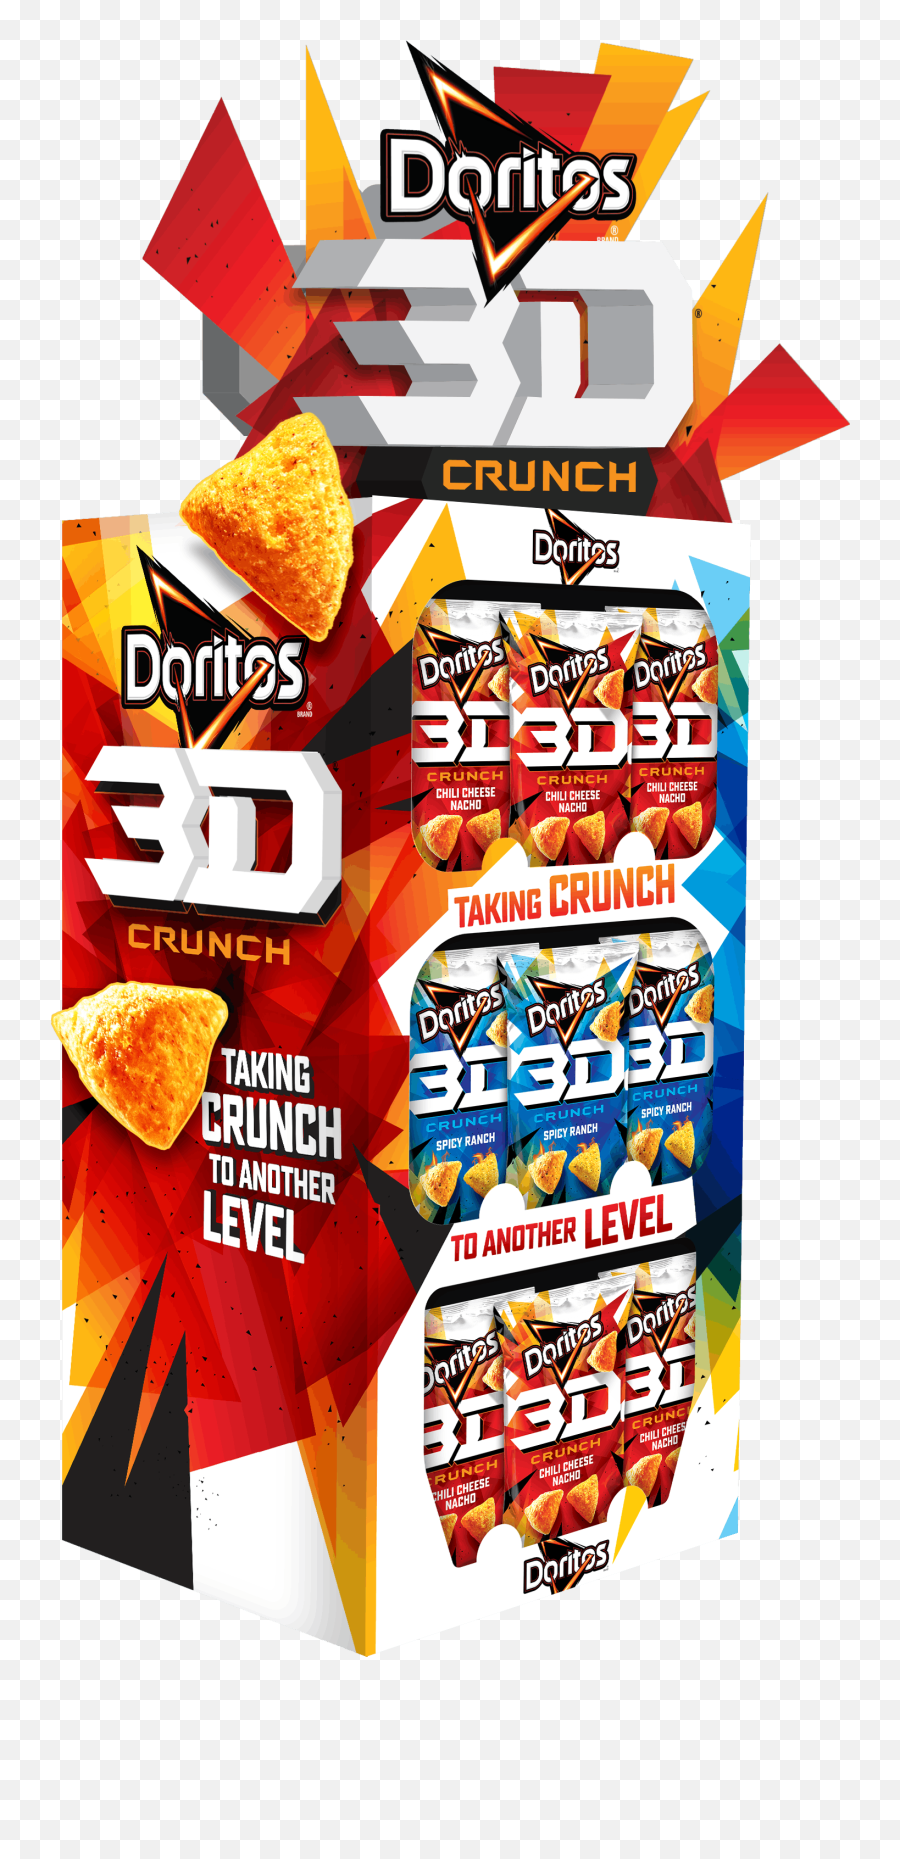 These New Doritos 3d Crunch Flavors Releasing In December - Doritos Emoji,Doritos Transparent